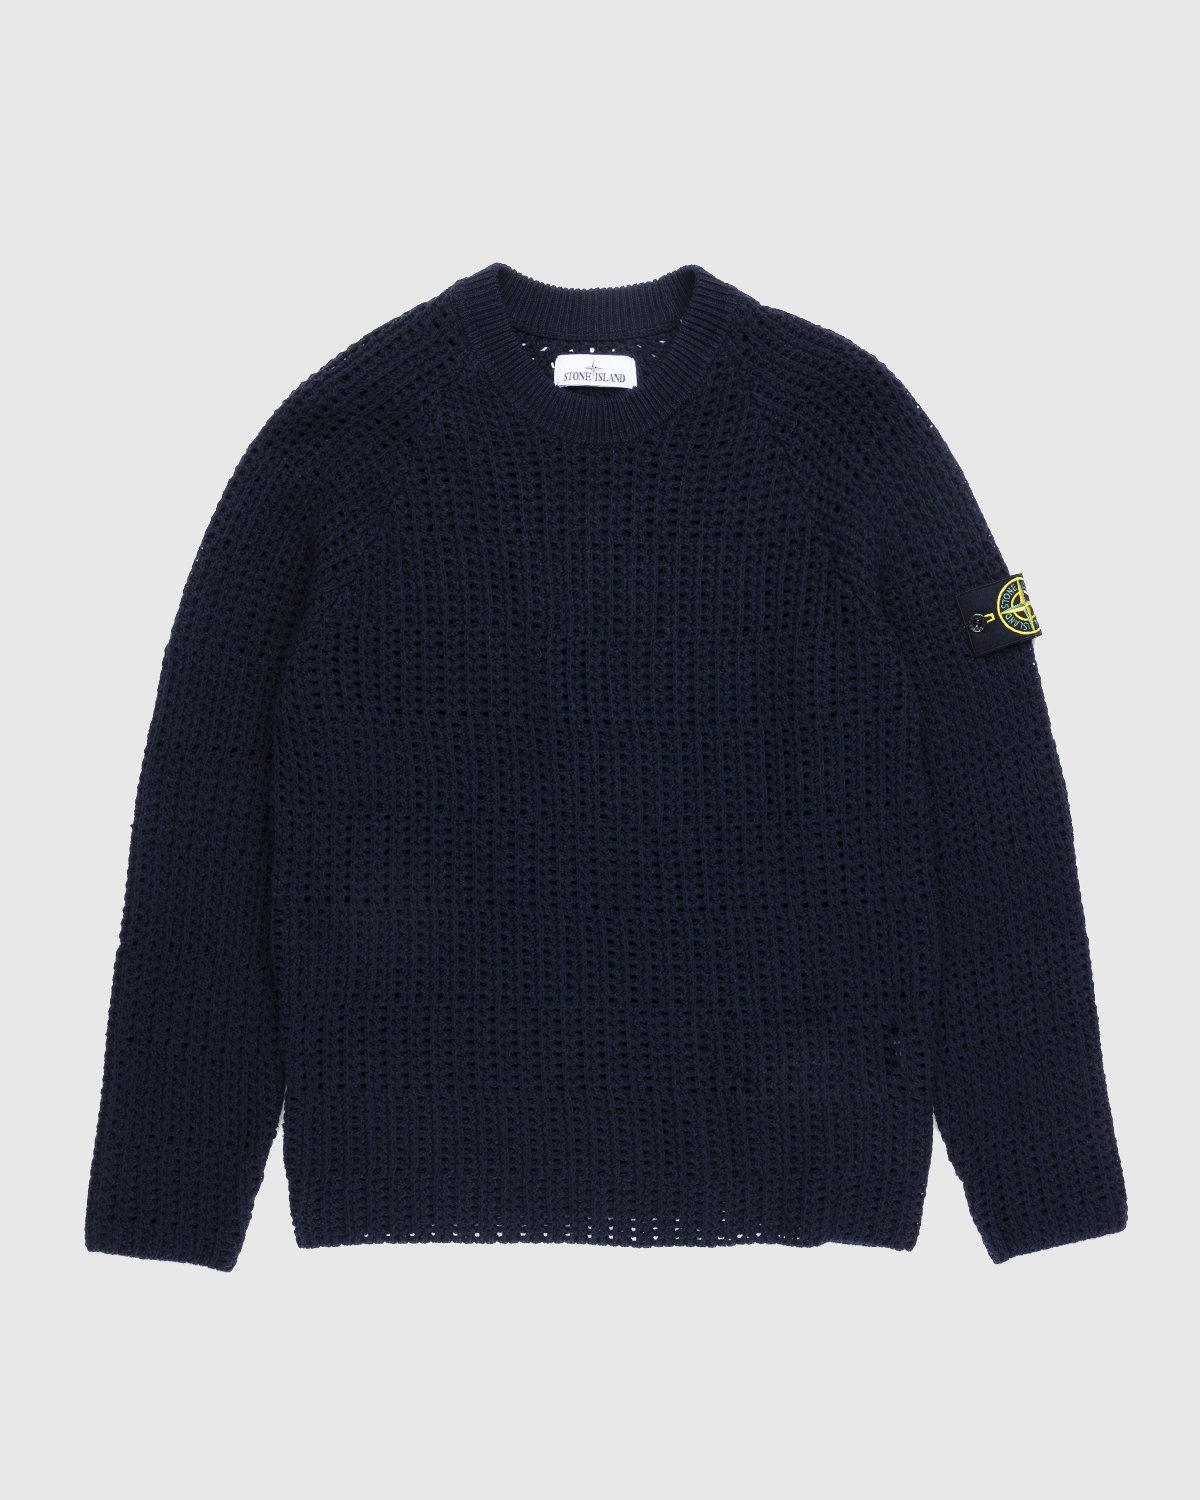 Stone Island - 528D3 Net Stitch Sweater Navy Blue - Clothing - Blue - Image 1